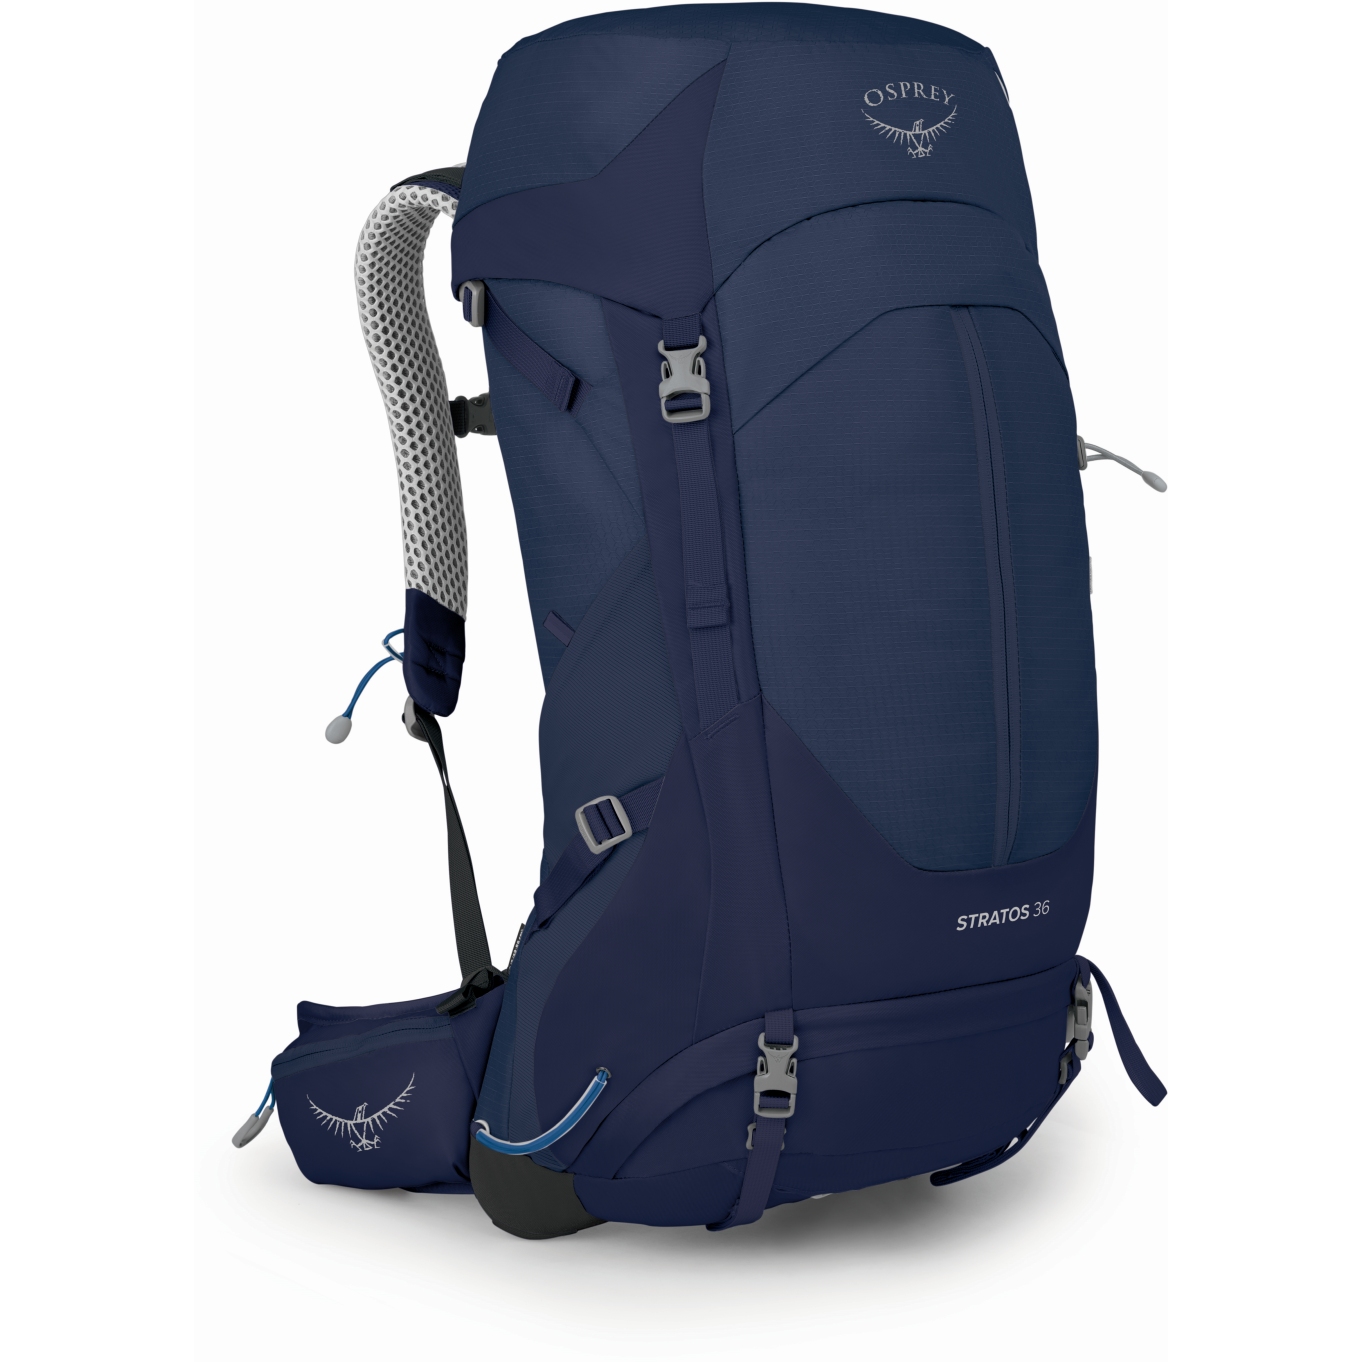 Productfoto van Osprey Stratos 36 Backpack - Cetacean Blue